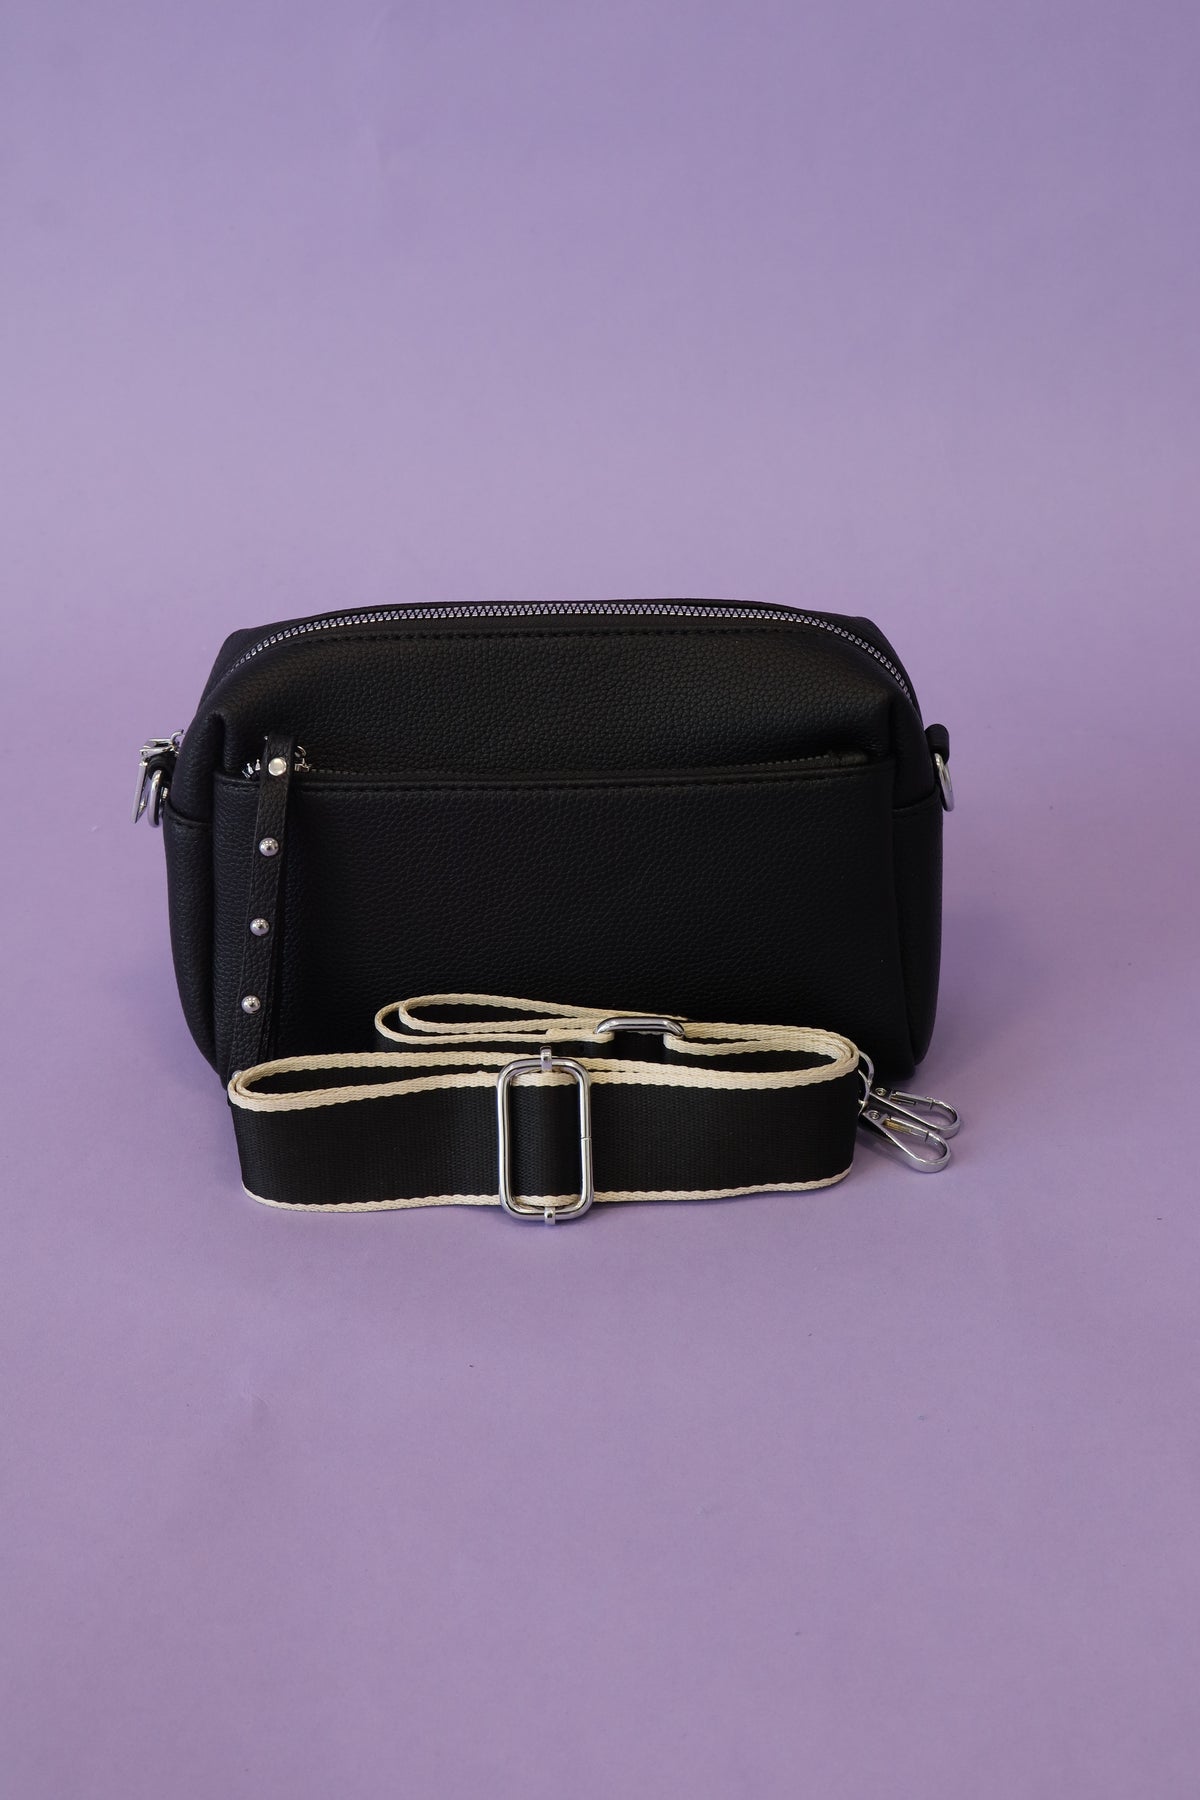 Wren Handbag in Black